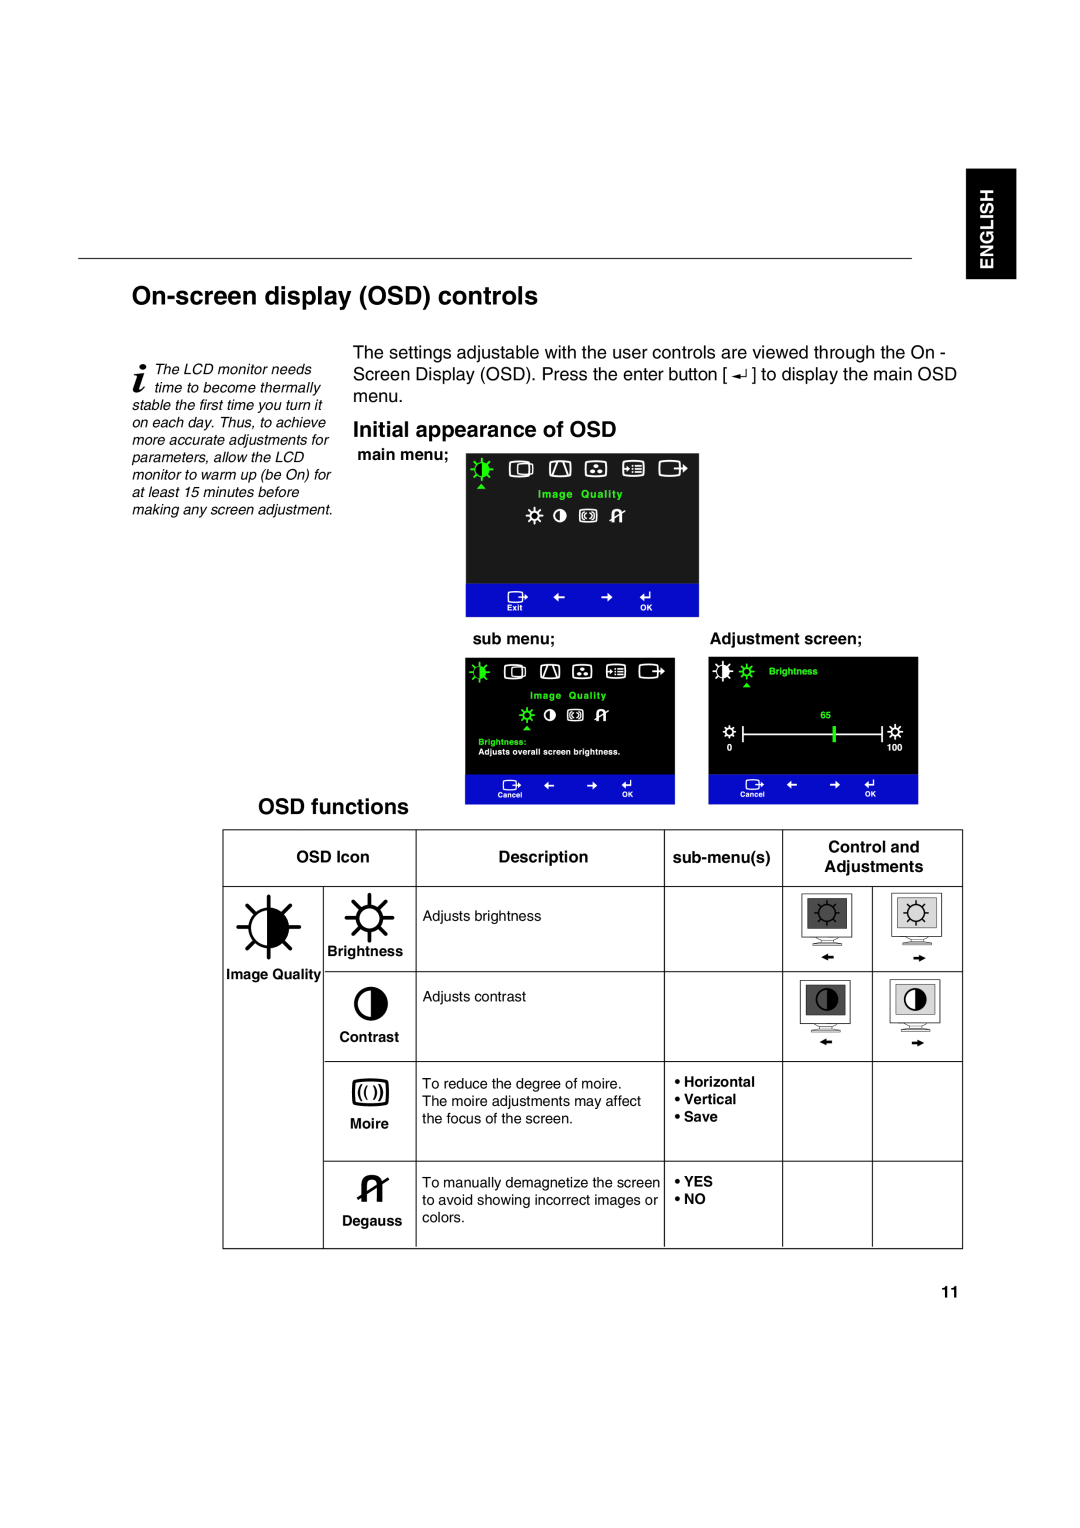 IBM C170 On-screen display OSD controls, Initial appearance of OSD, OSD functions, English, main menu, sub menu, OSD Icon 